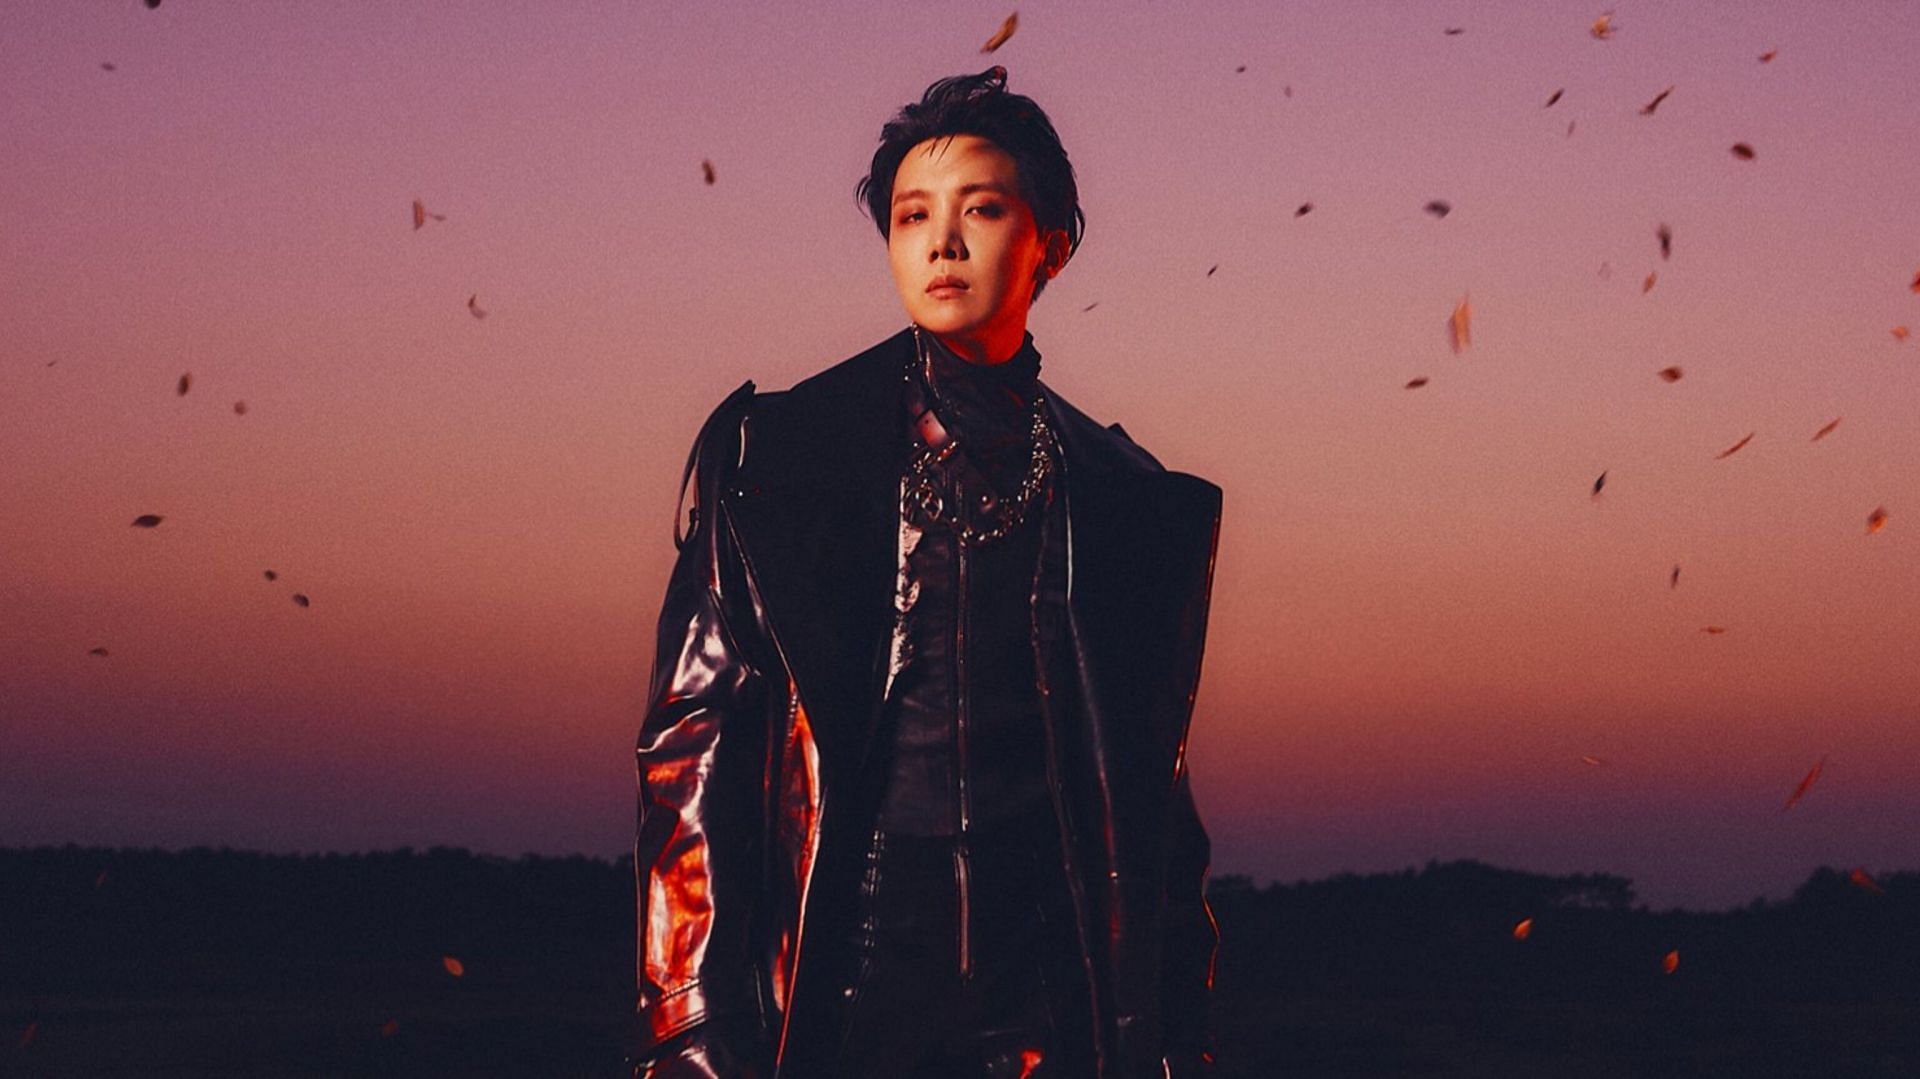 BTS' J-Hope Announces New Single On the Street Ahead of Military